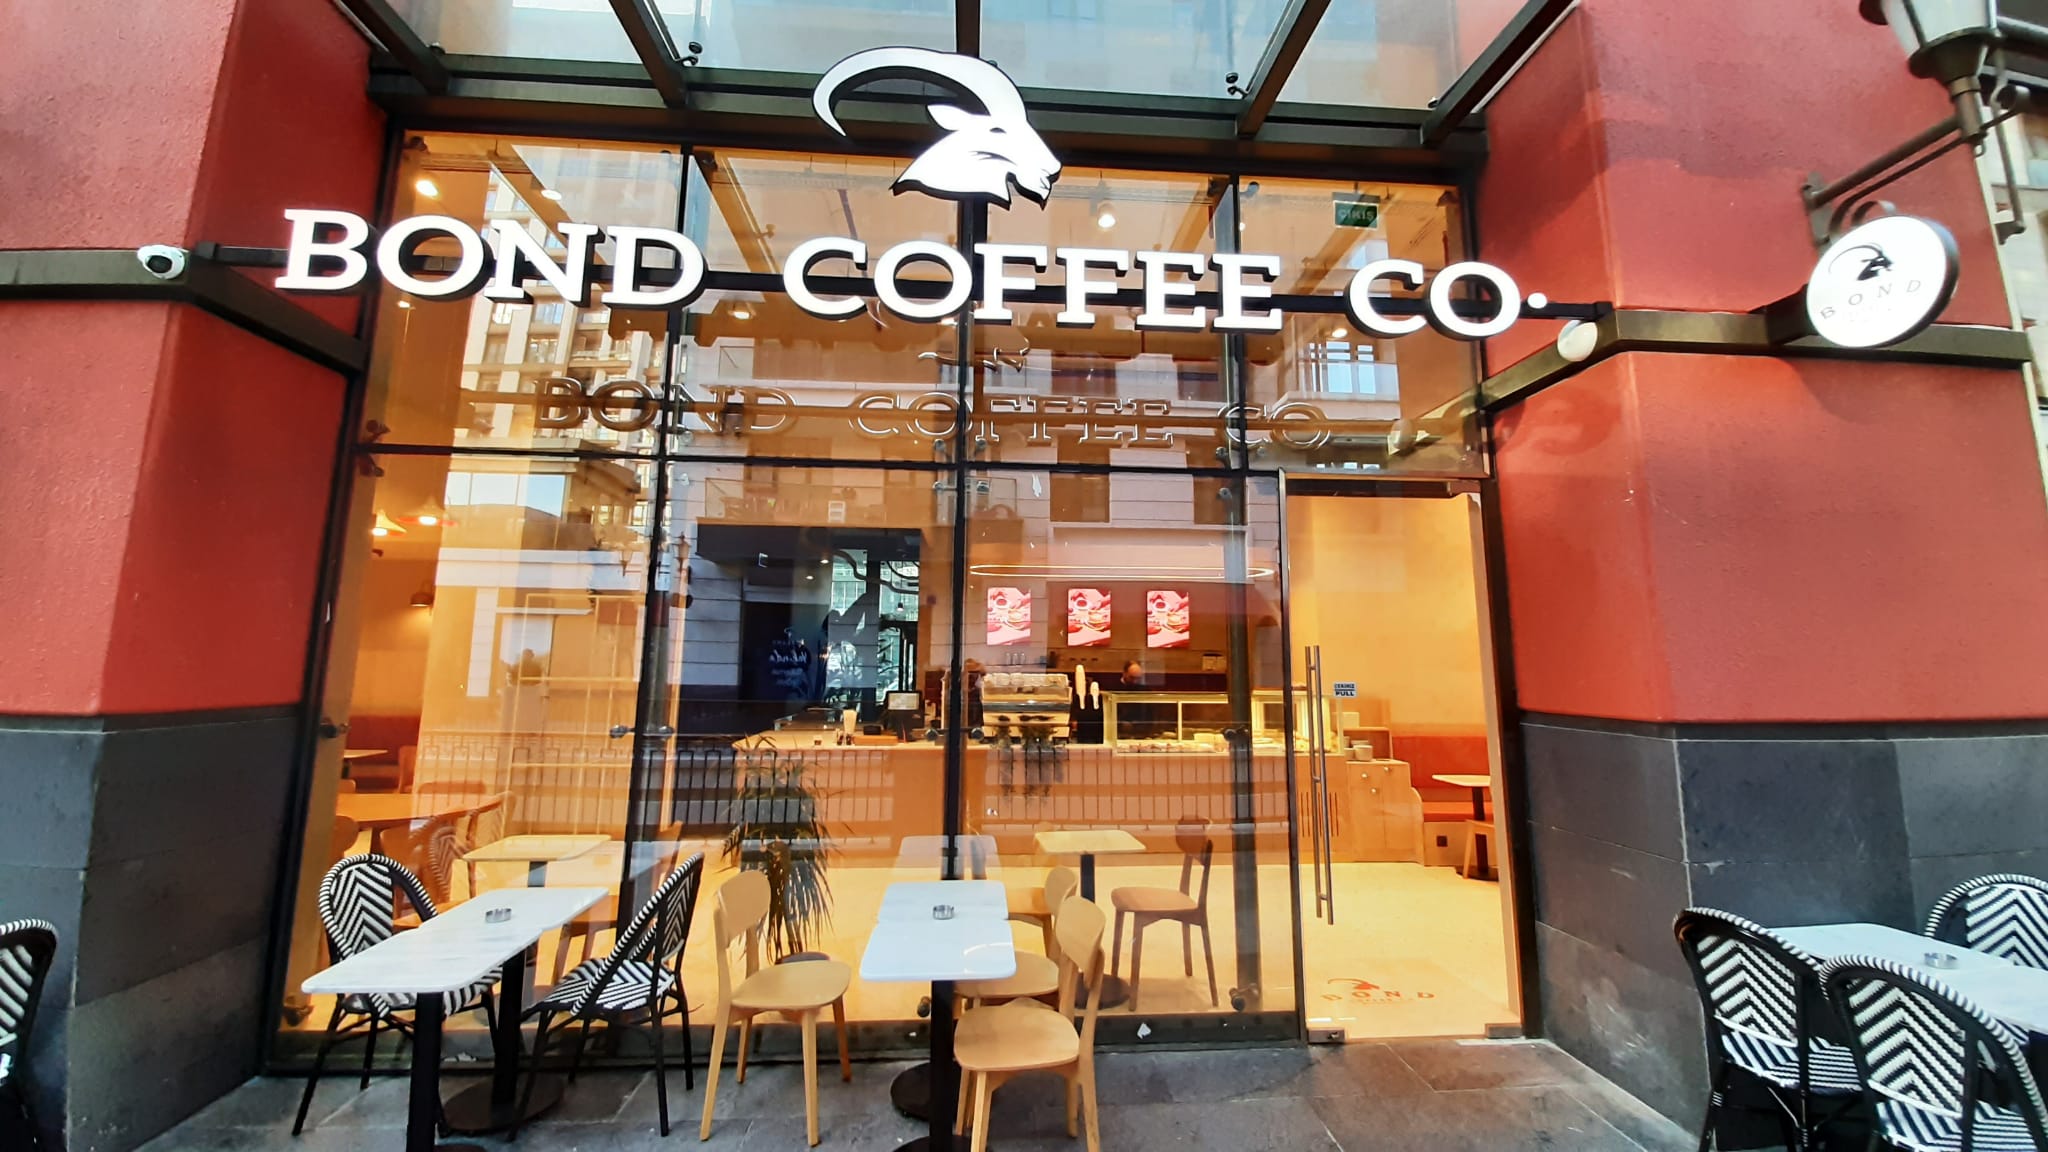 Piyalepaşa Çarşı'da Bond Coffee Co. açıldı.